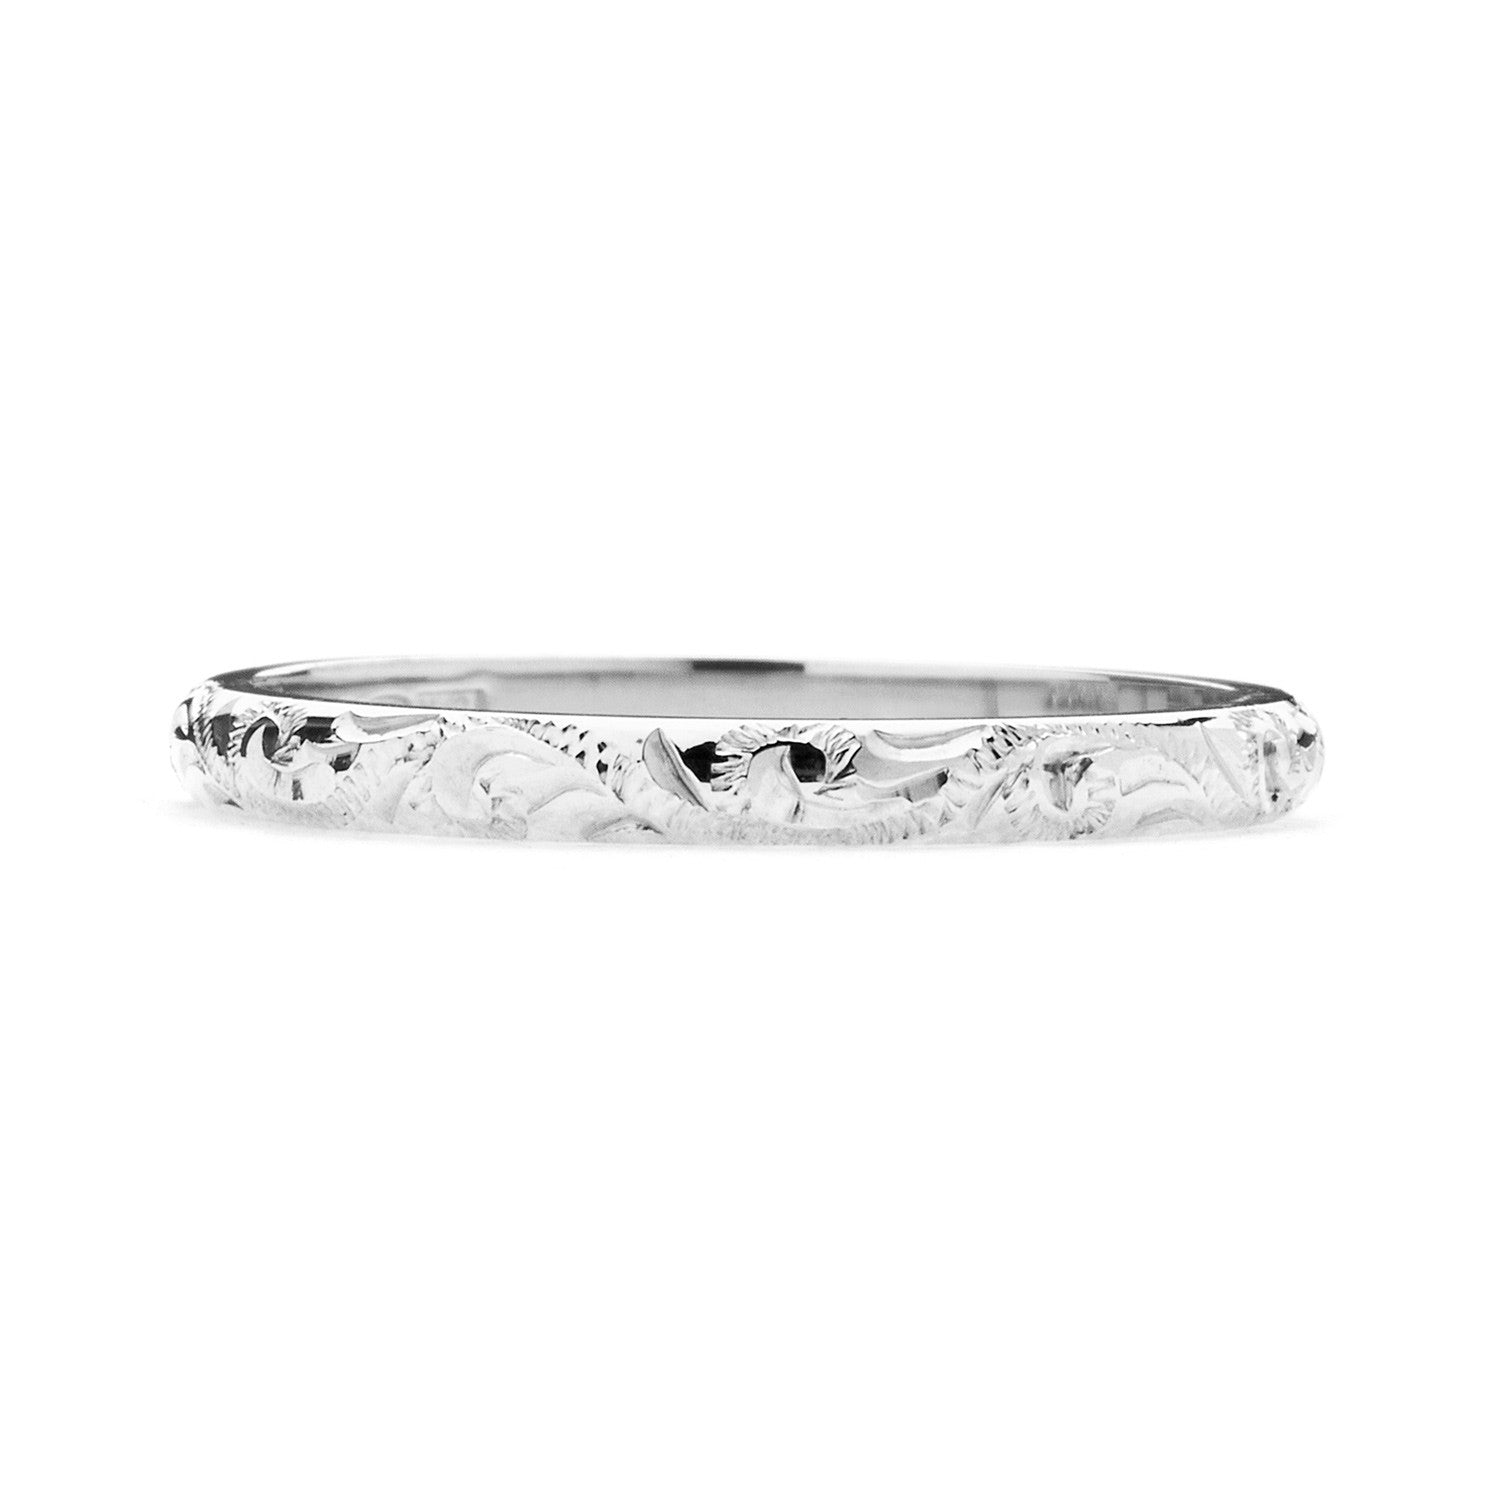 Leaf Adjustable Ring – Artise Jewelry